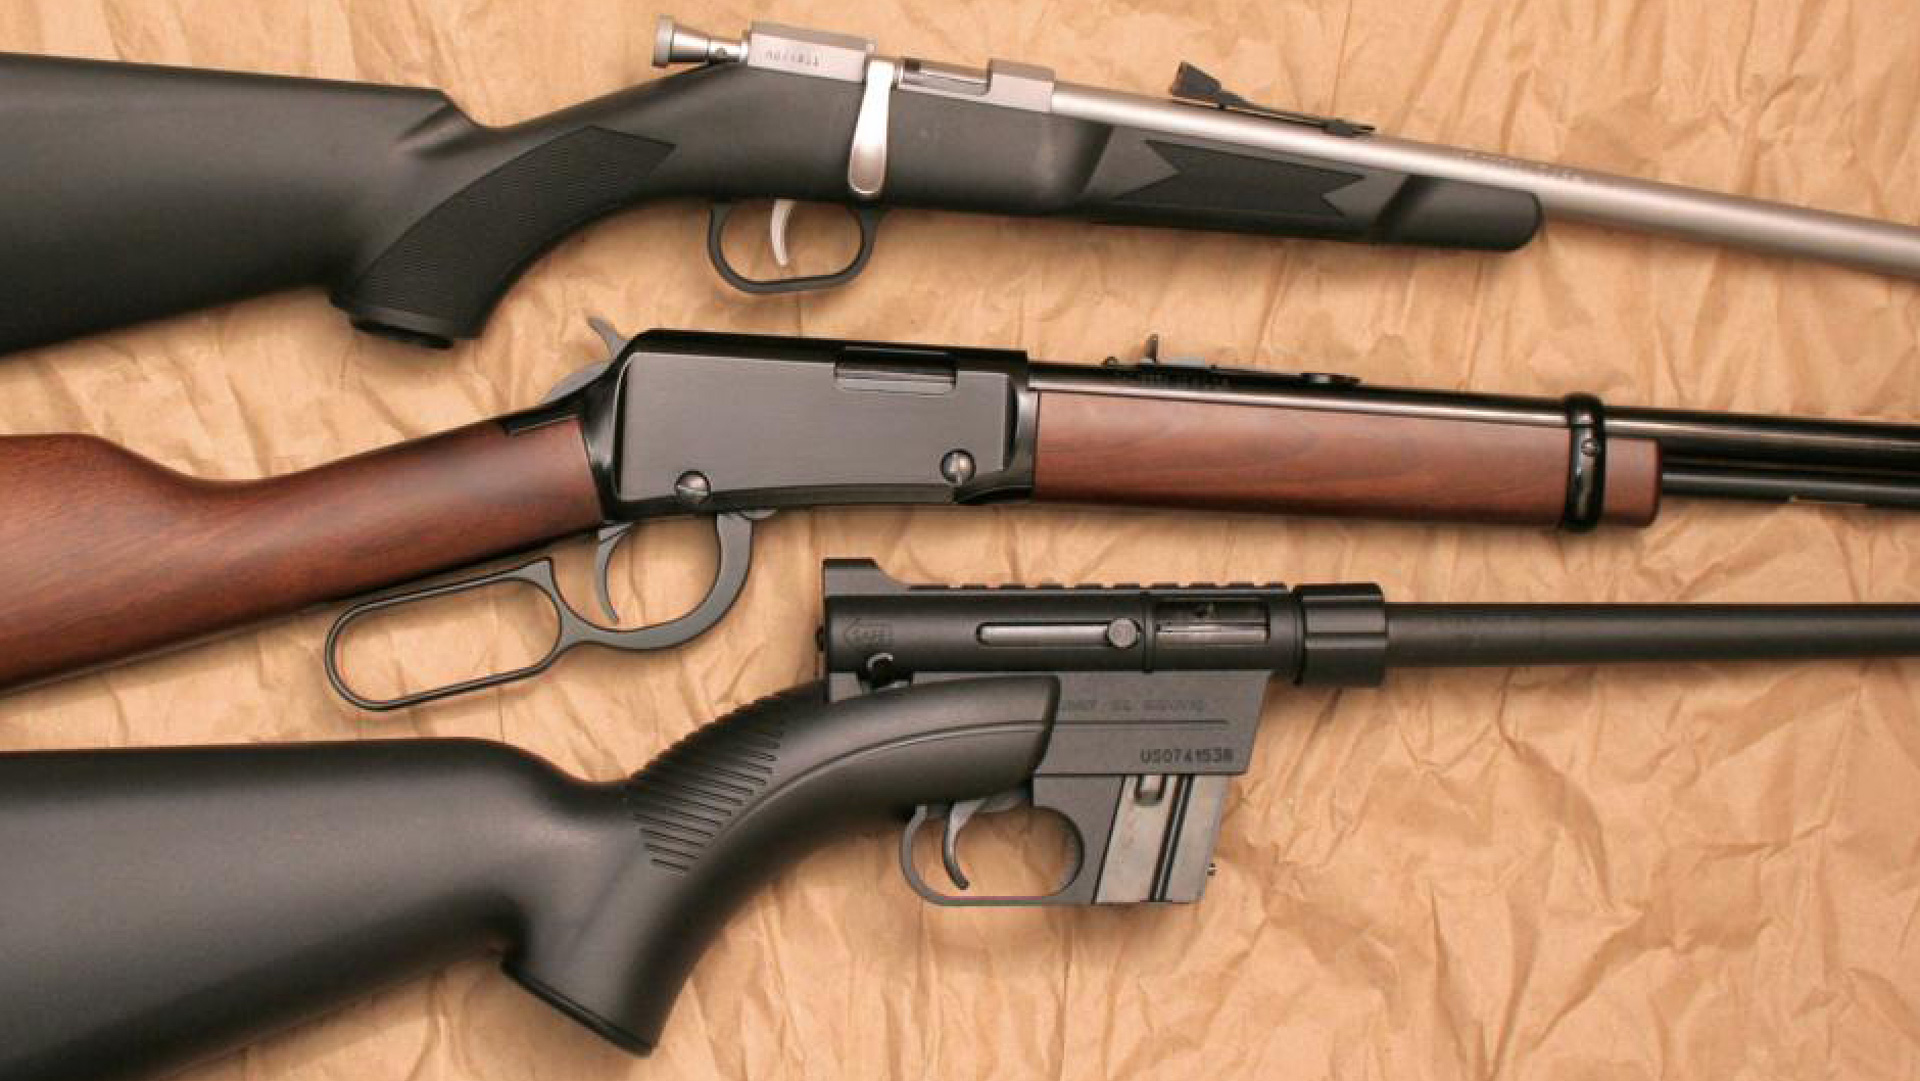 New SA firearms will enhance flexibility, reliability, safety